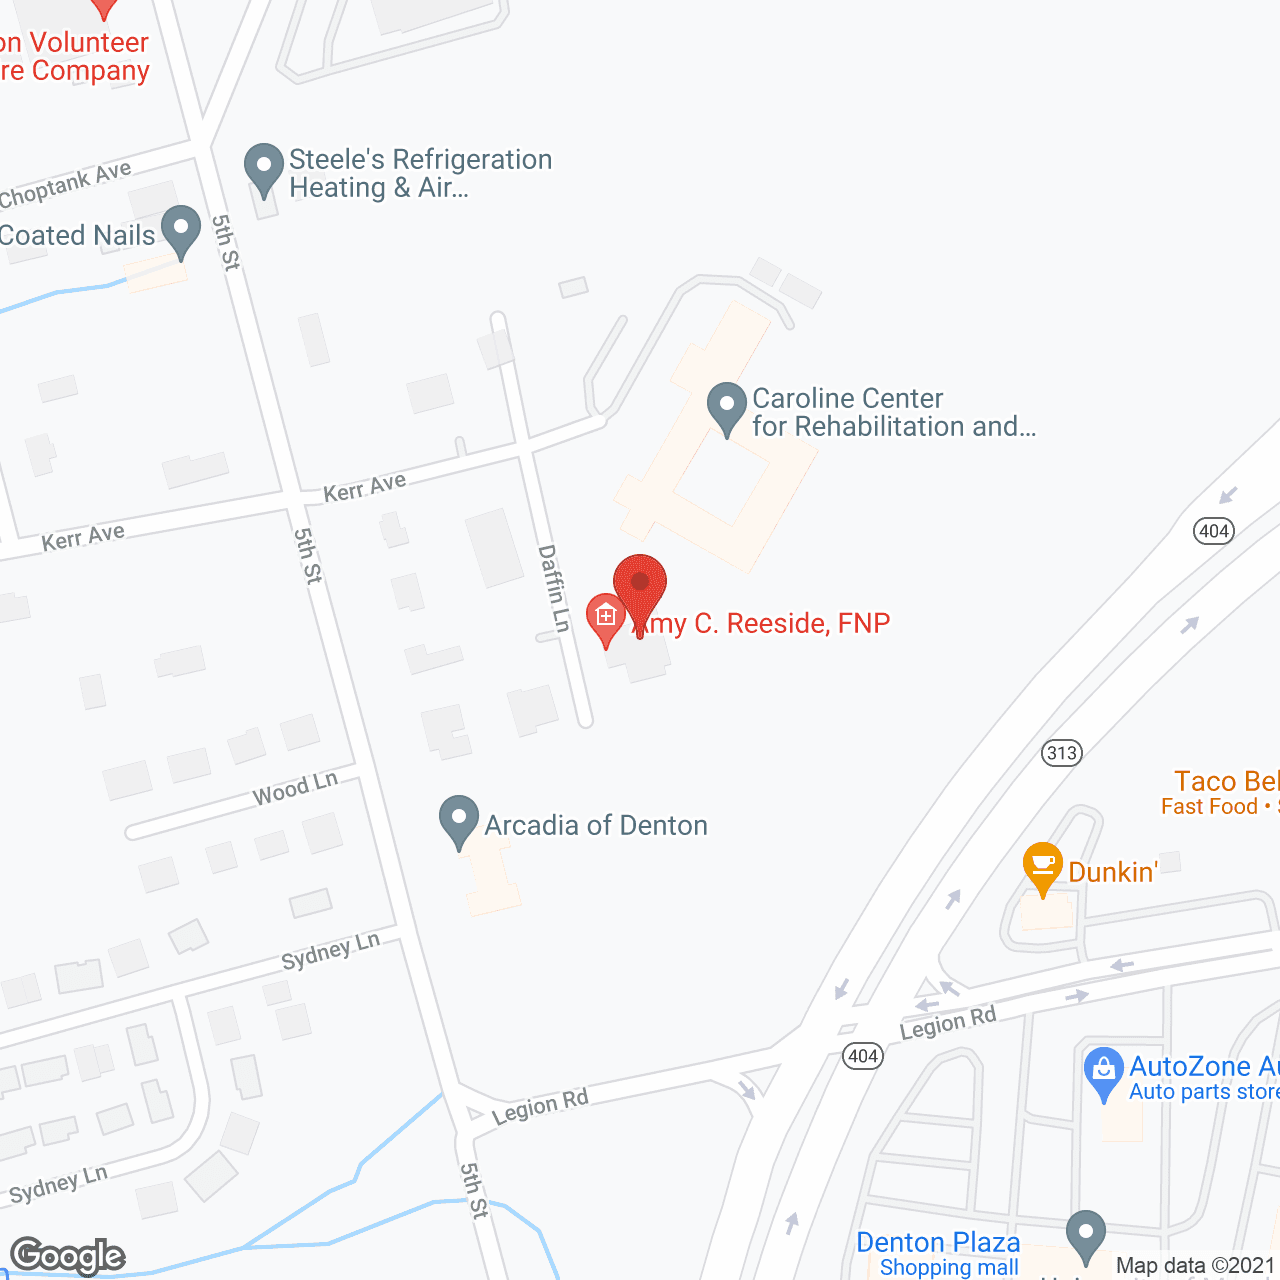 Arcadia of Denton II in google map